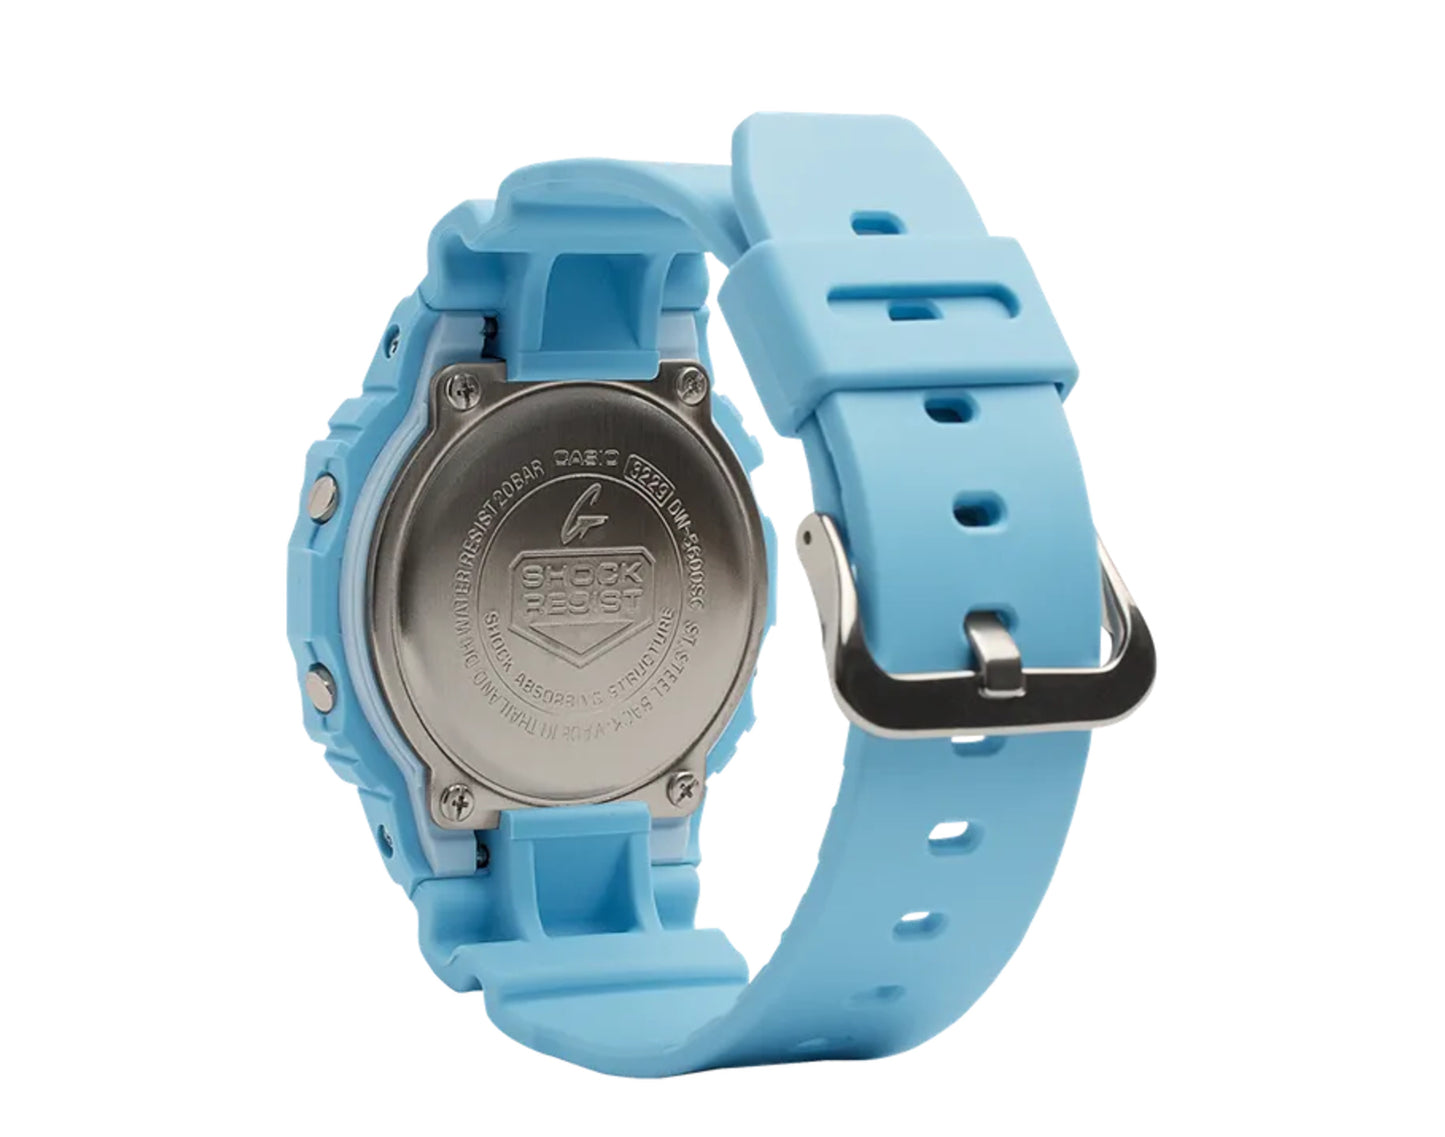 Casio G-Shock DW5600SC Digital Resin Pale Blue Watch DW5600SC-2